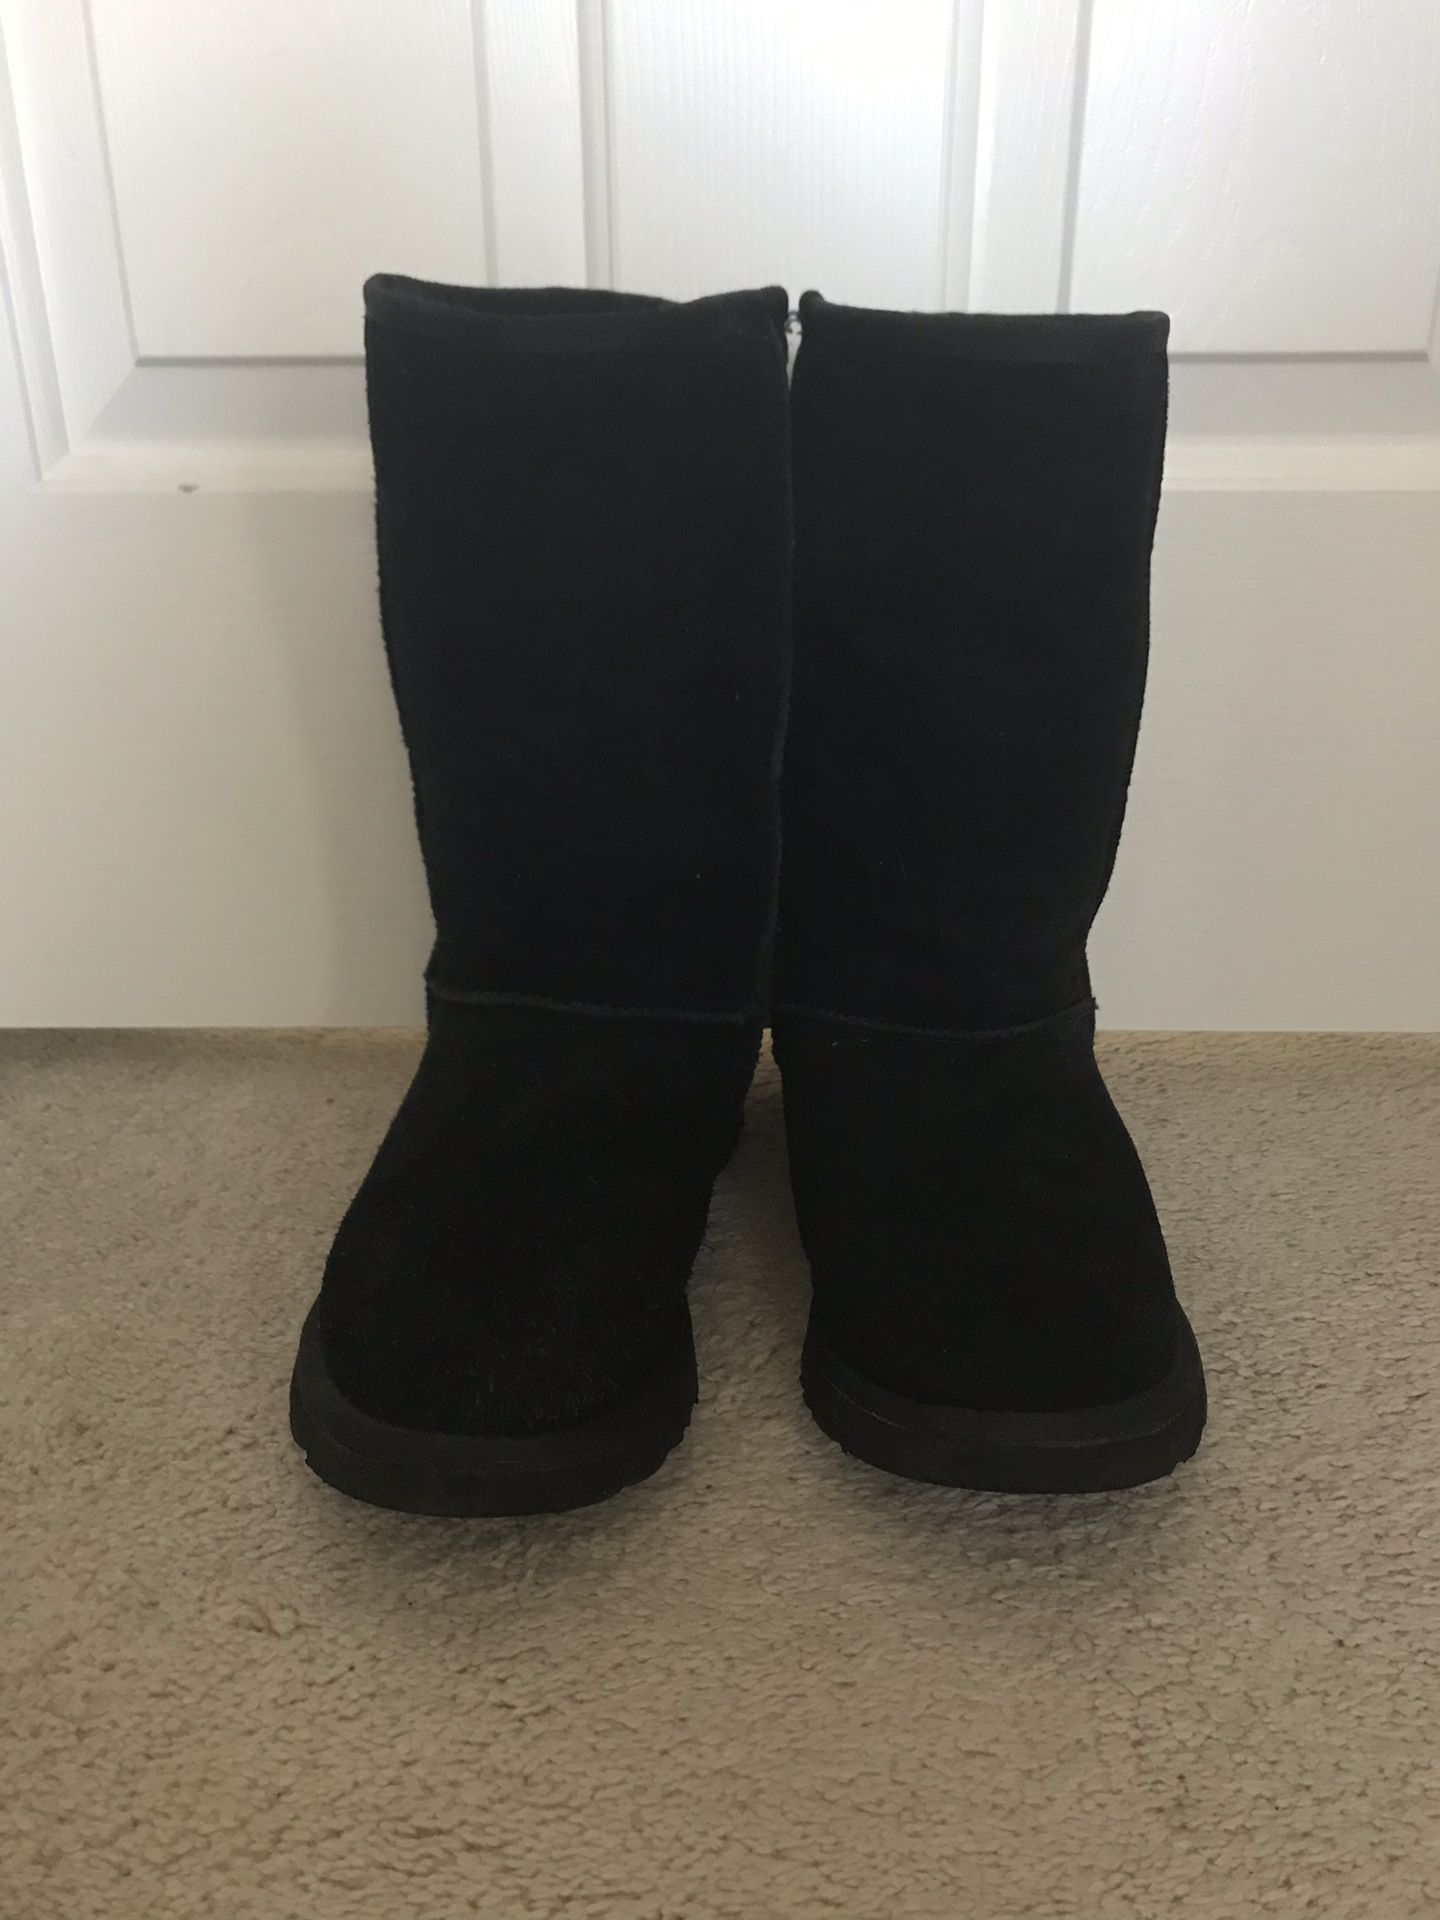 Black UGG boots size 10